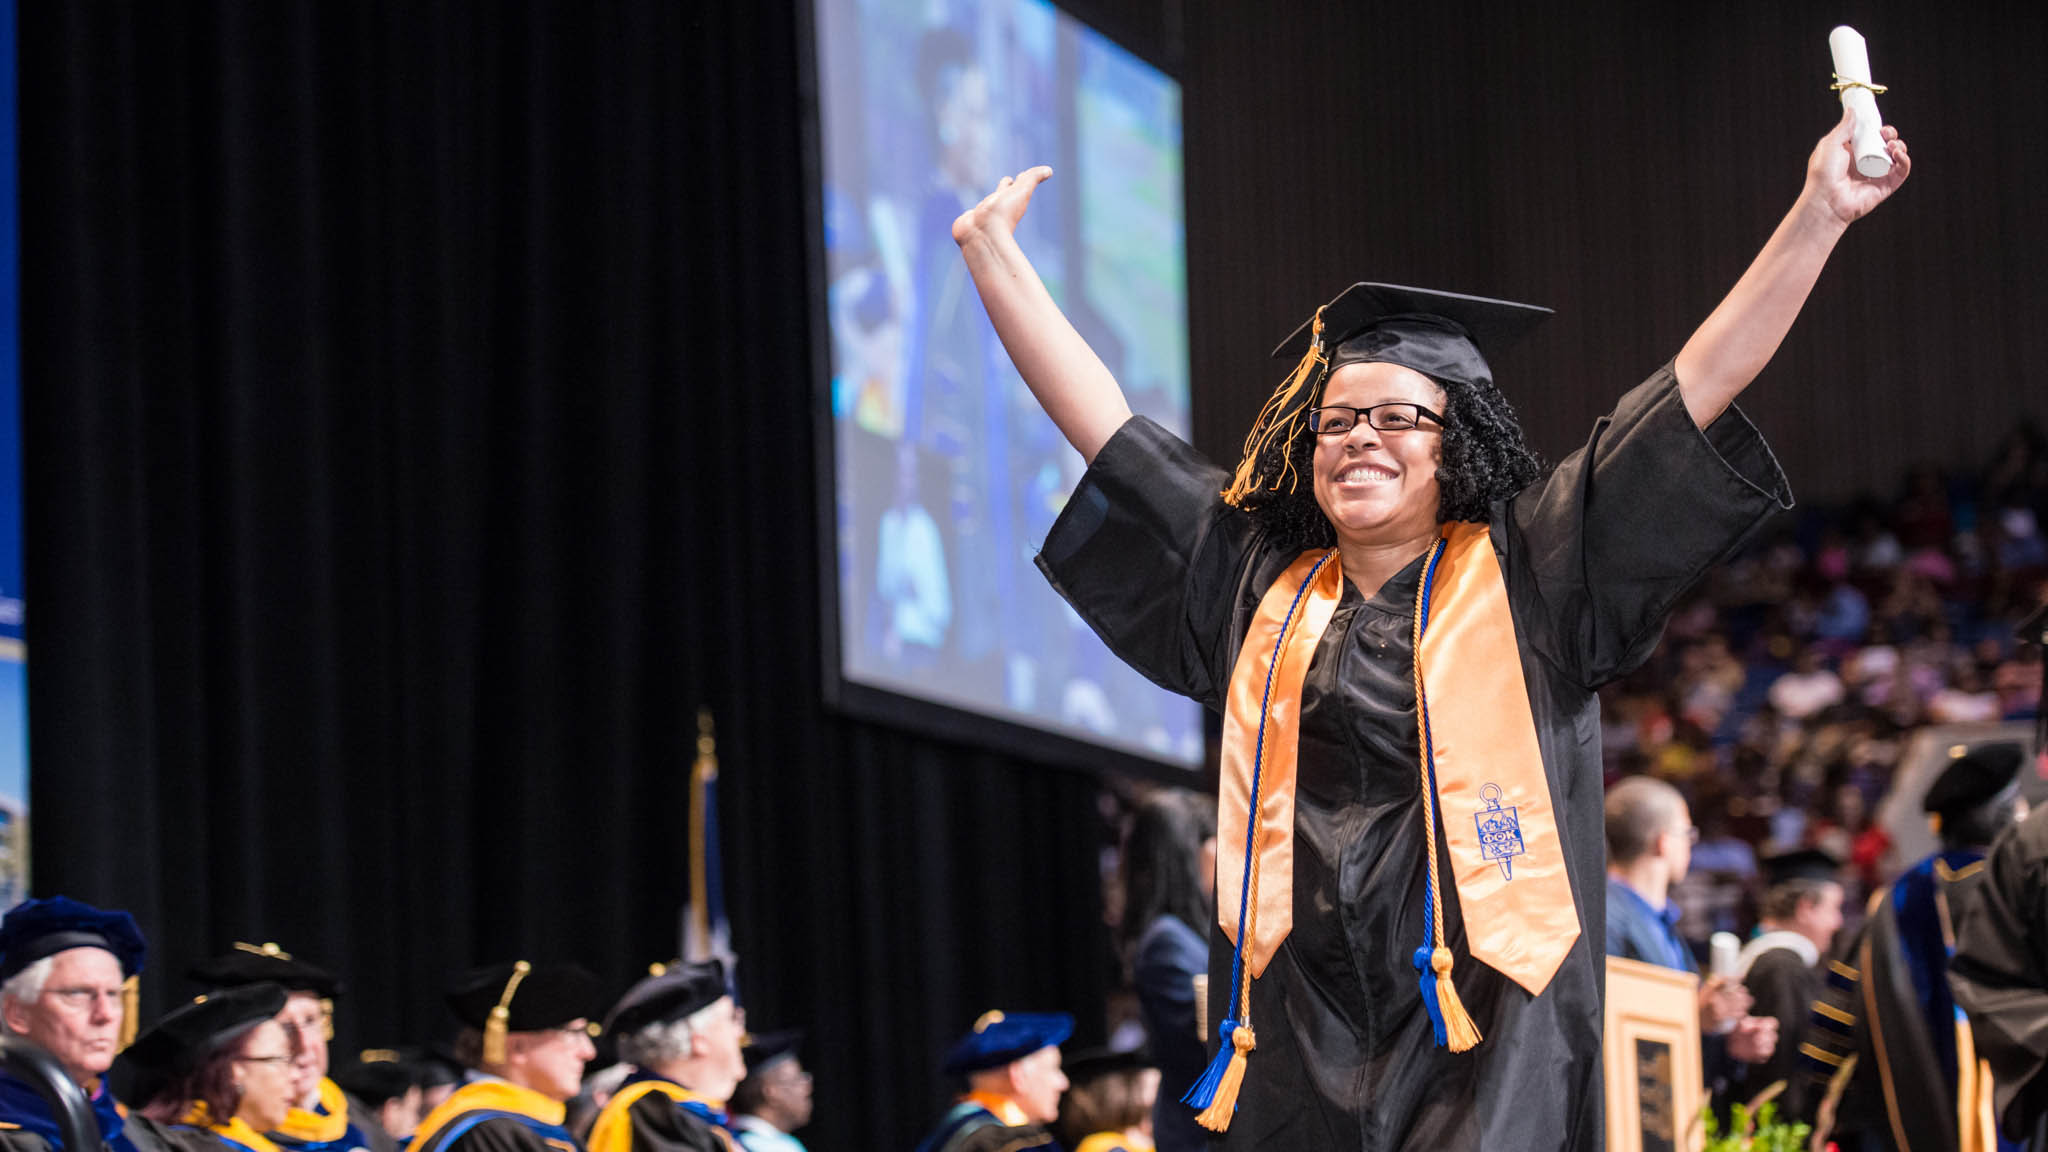 A student celebrates success at the TCC graduation